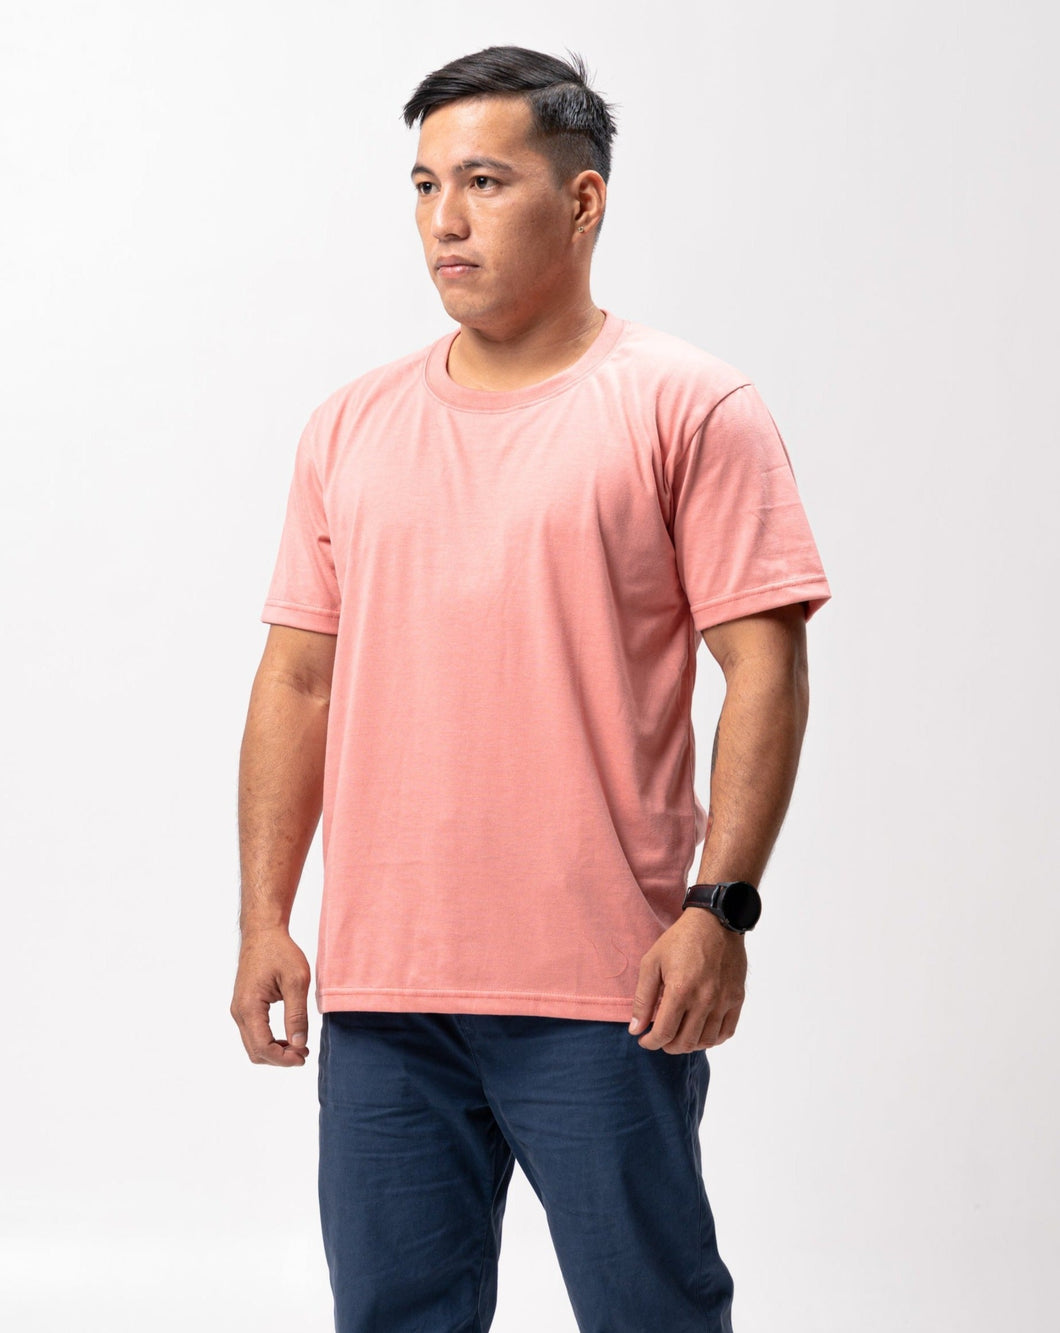 Copper Rose Sun Plain T-Shirt